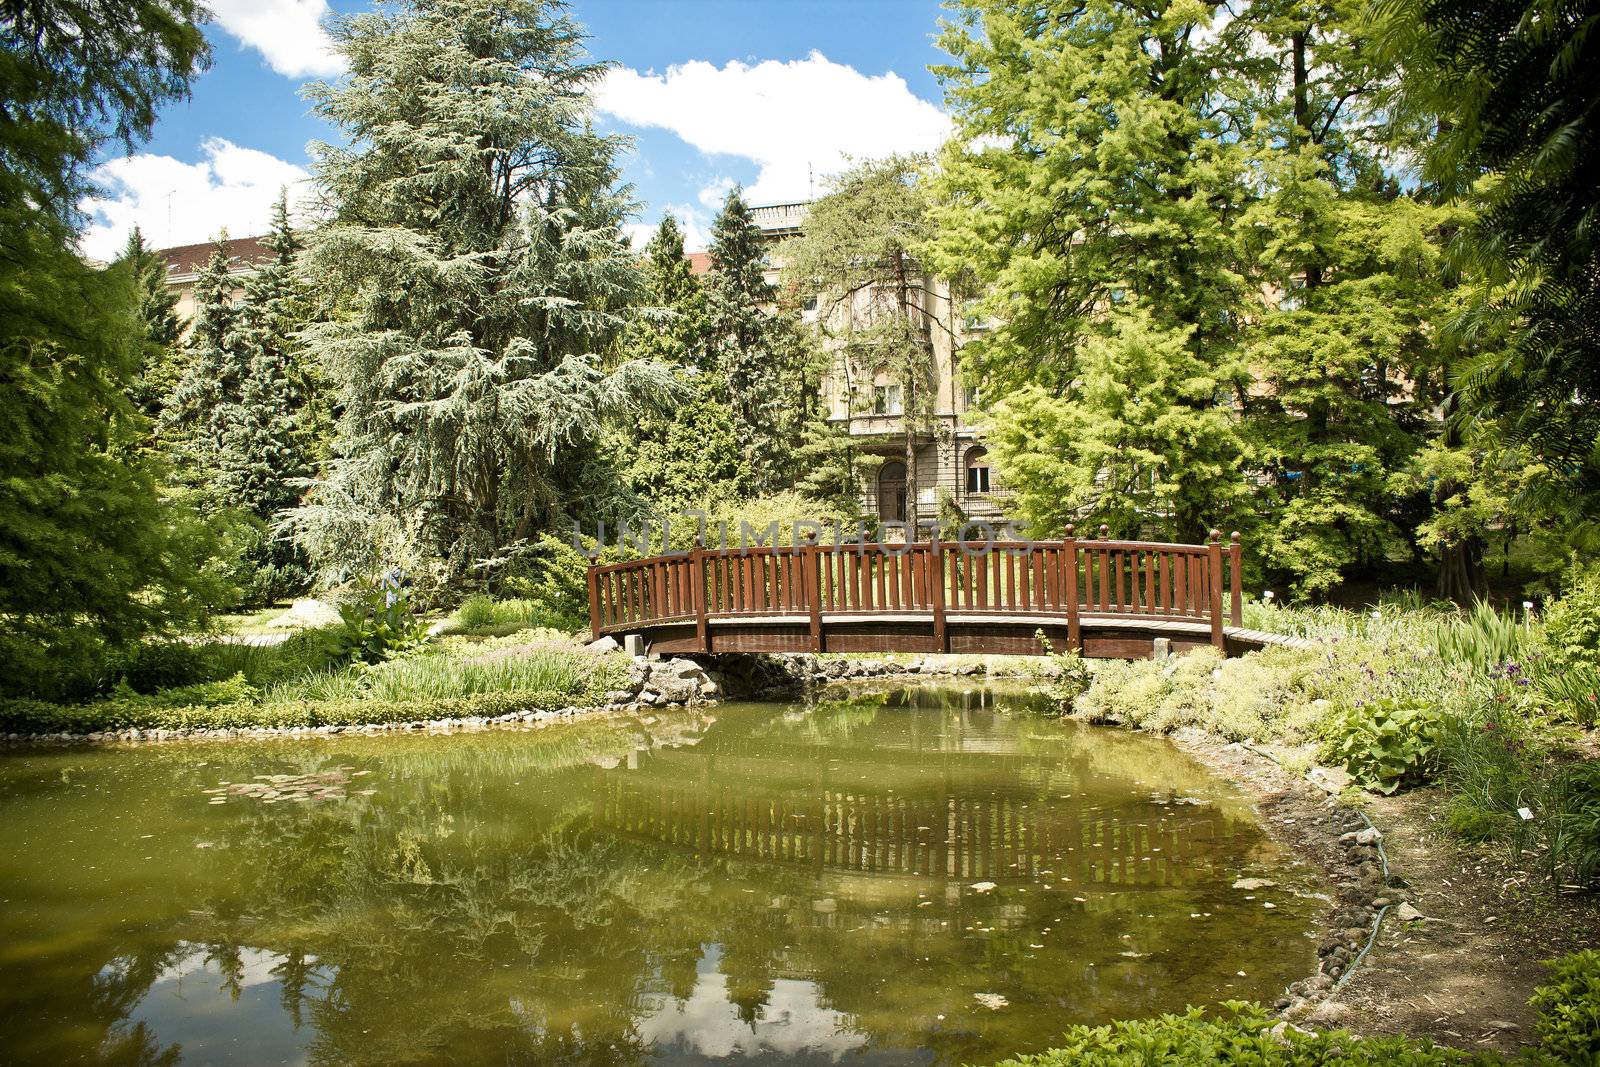 Zagreb botanical garden lake and wooden bridge, Croatia